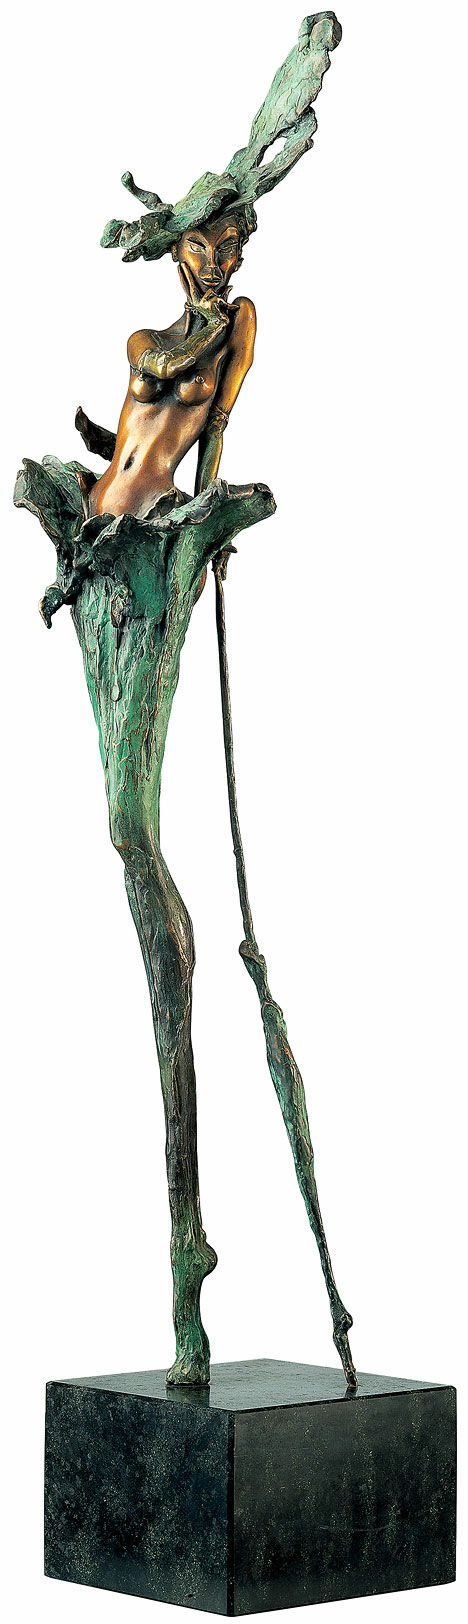 Sculpture "When the lady smiles" (1995), bronze by Marc van Megen